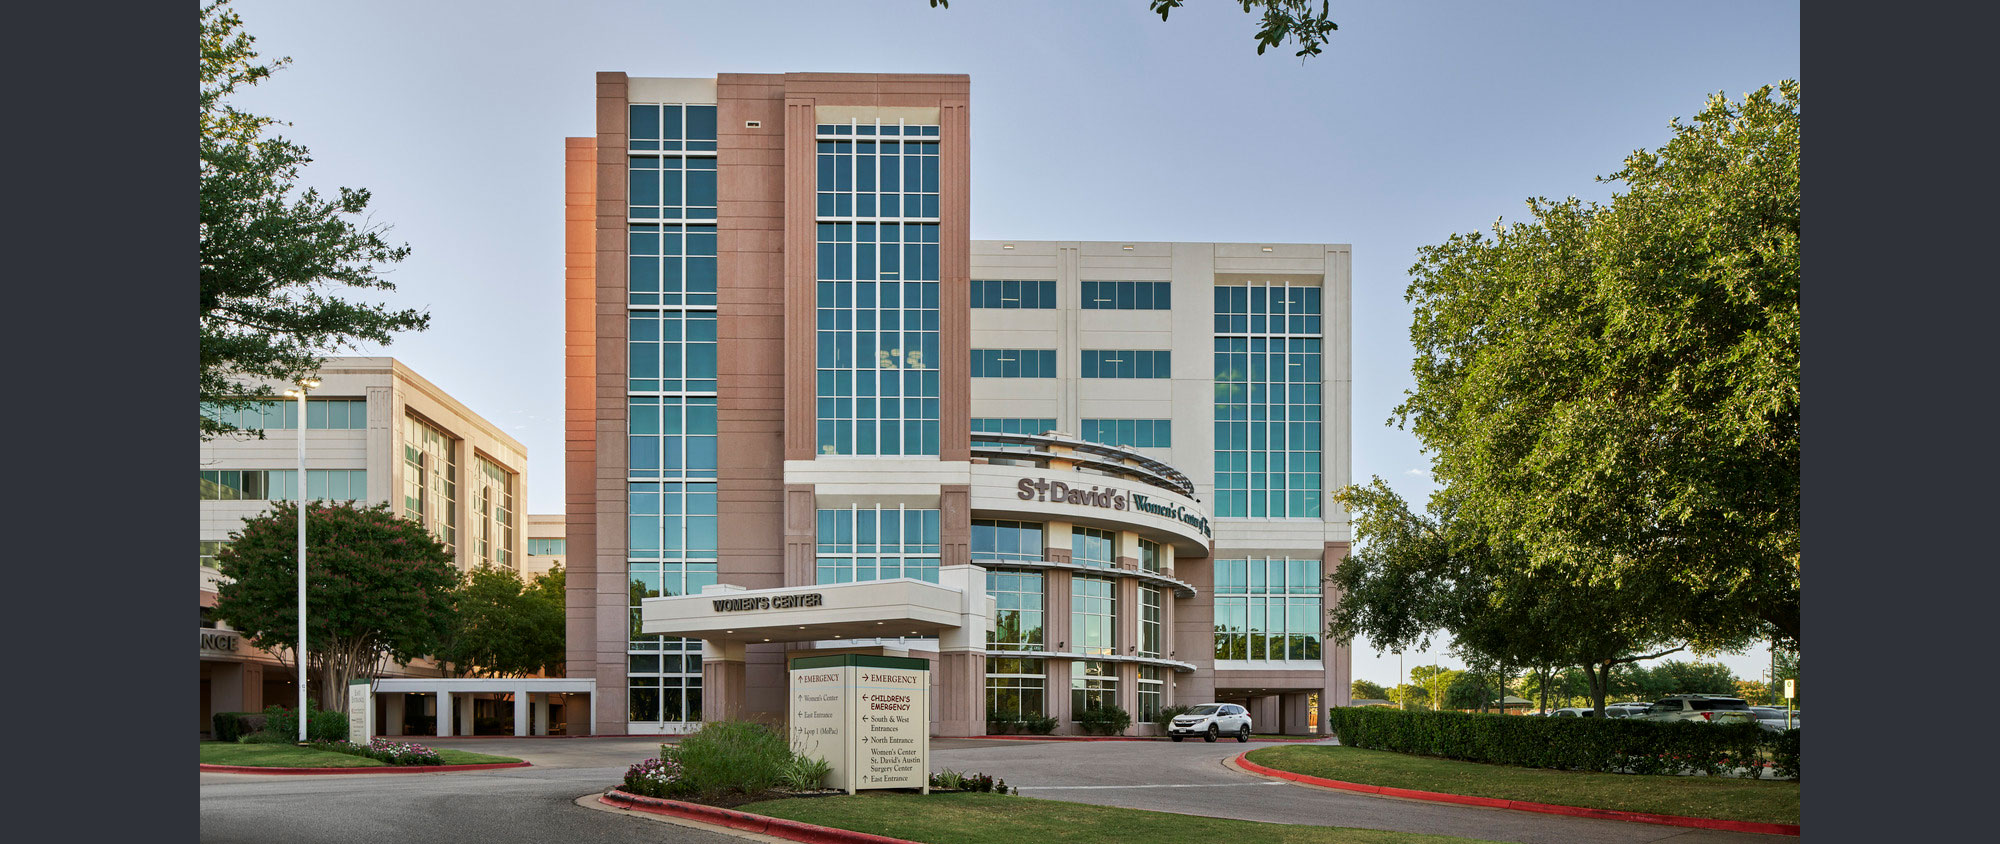 St. David’s North Austin Medical Center